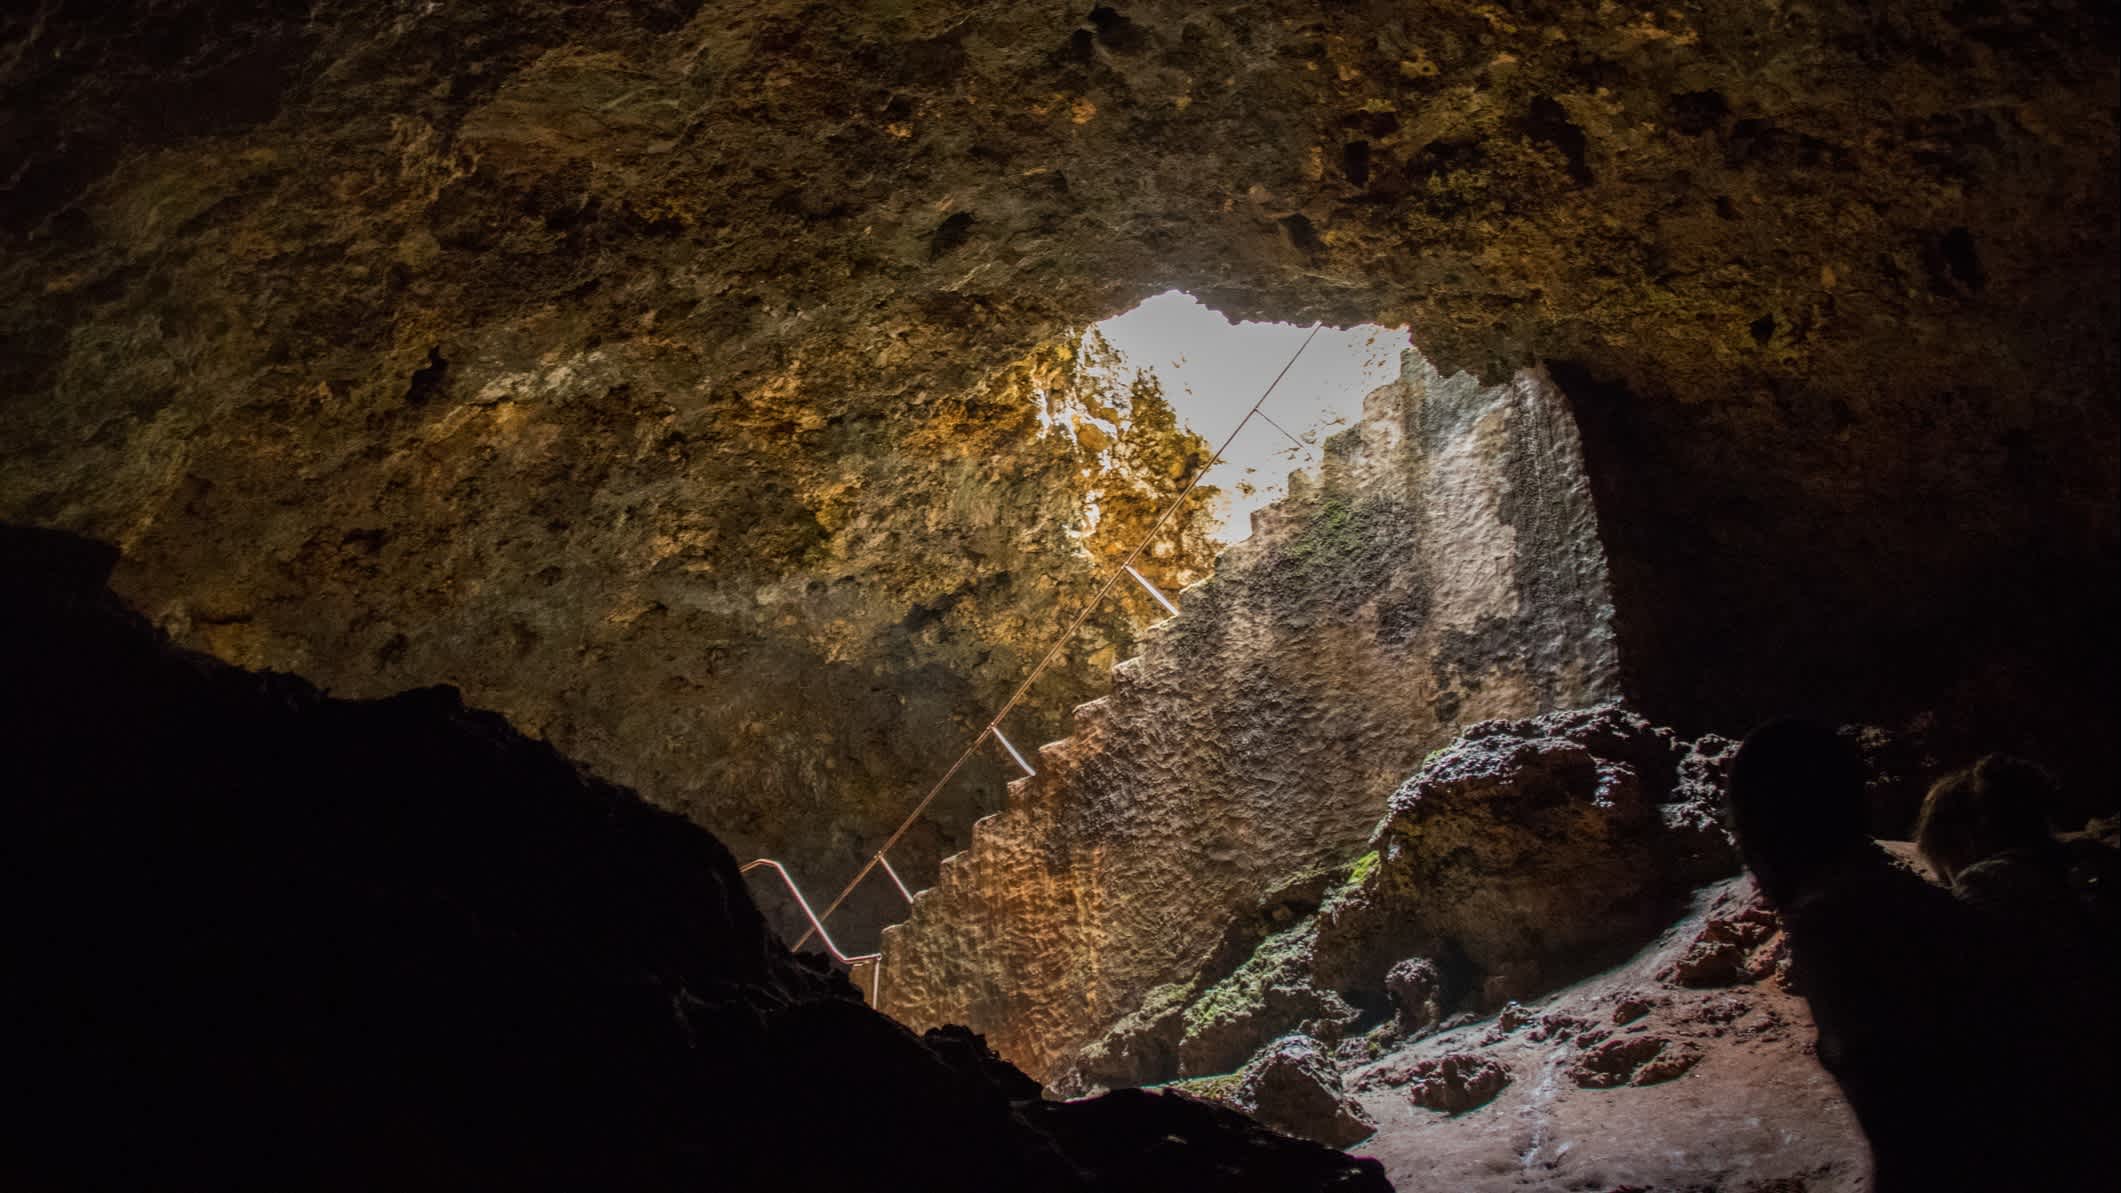 Blick zu der Slave-Höhle in Sansibar, Tansania

